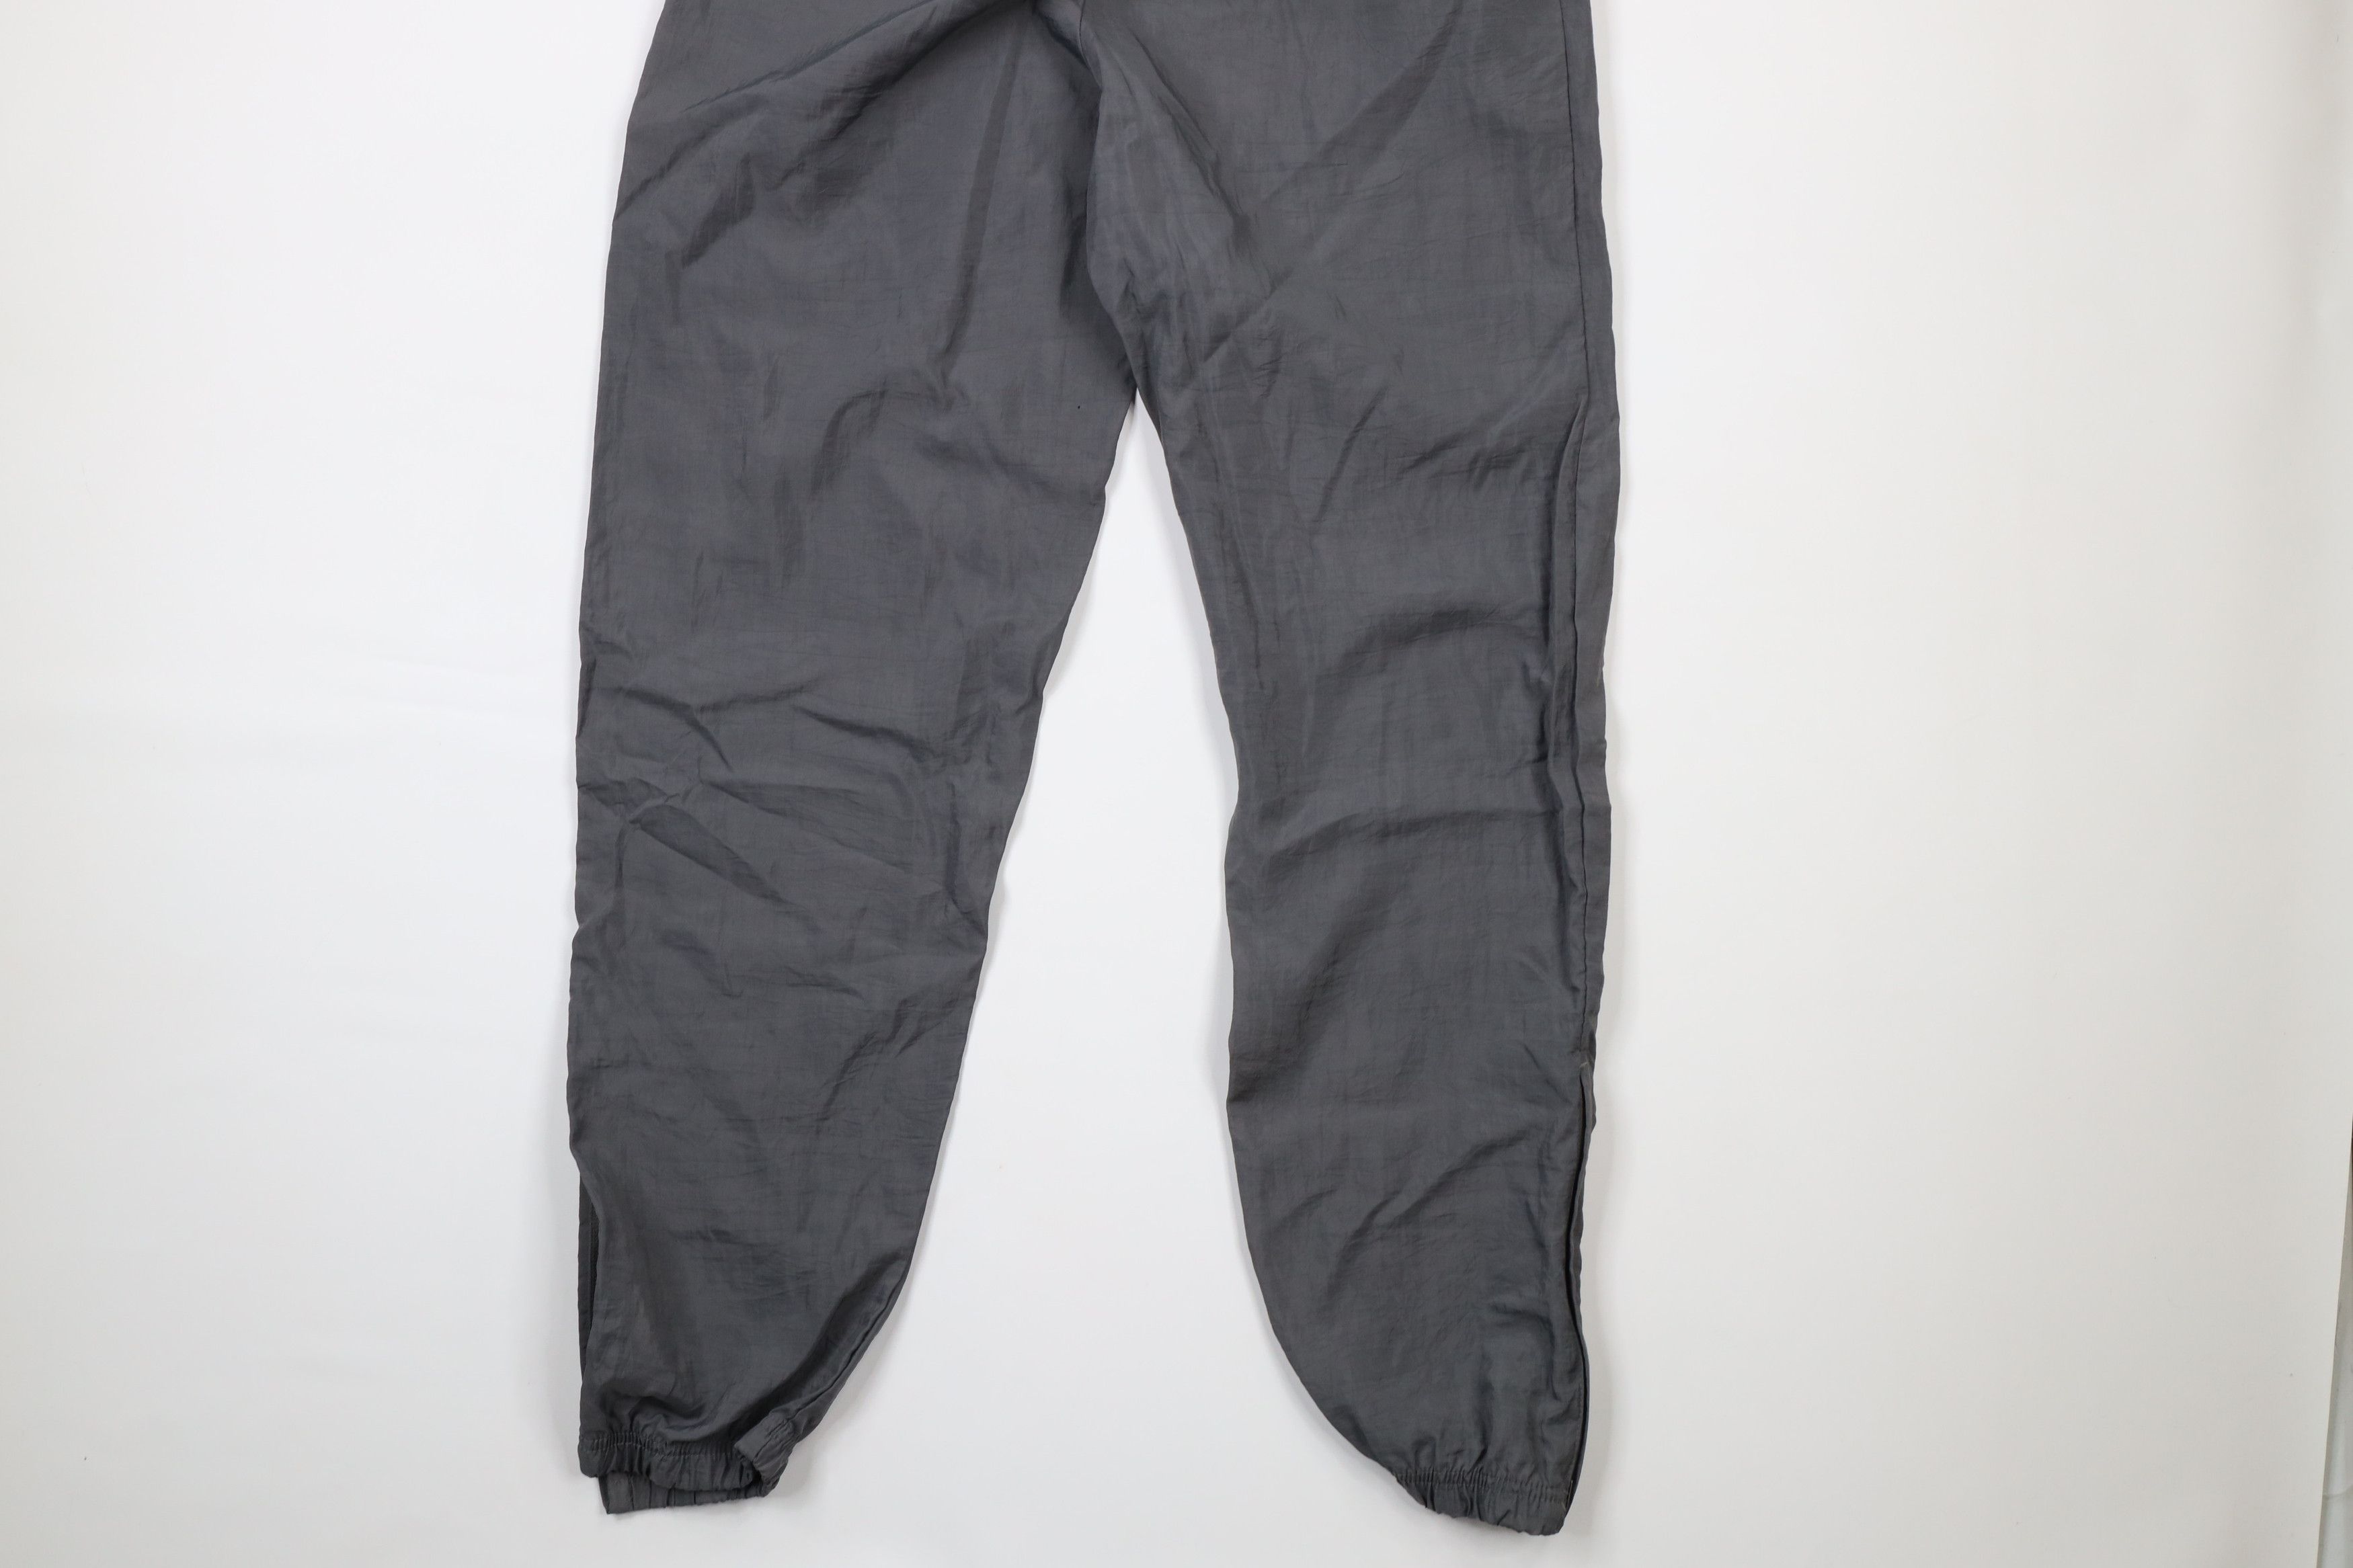 Vintage Vintage 90s Reebok Cuffed Nylon Joggers Jogger Pants Gray Size US 34 / EU 50 - 12 Preview